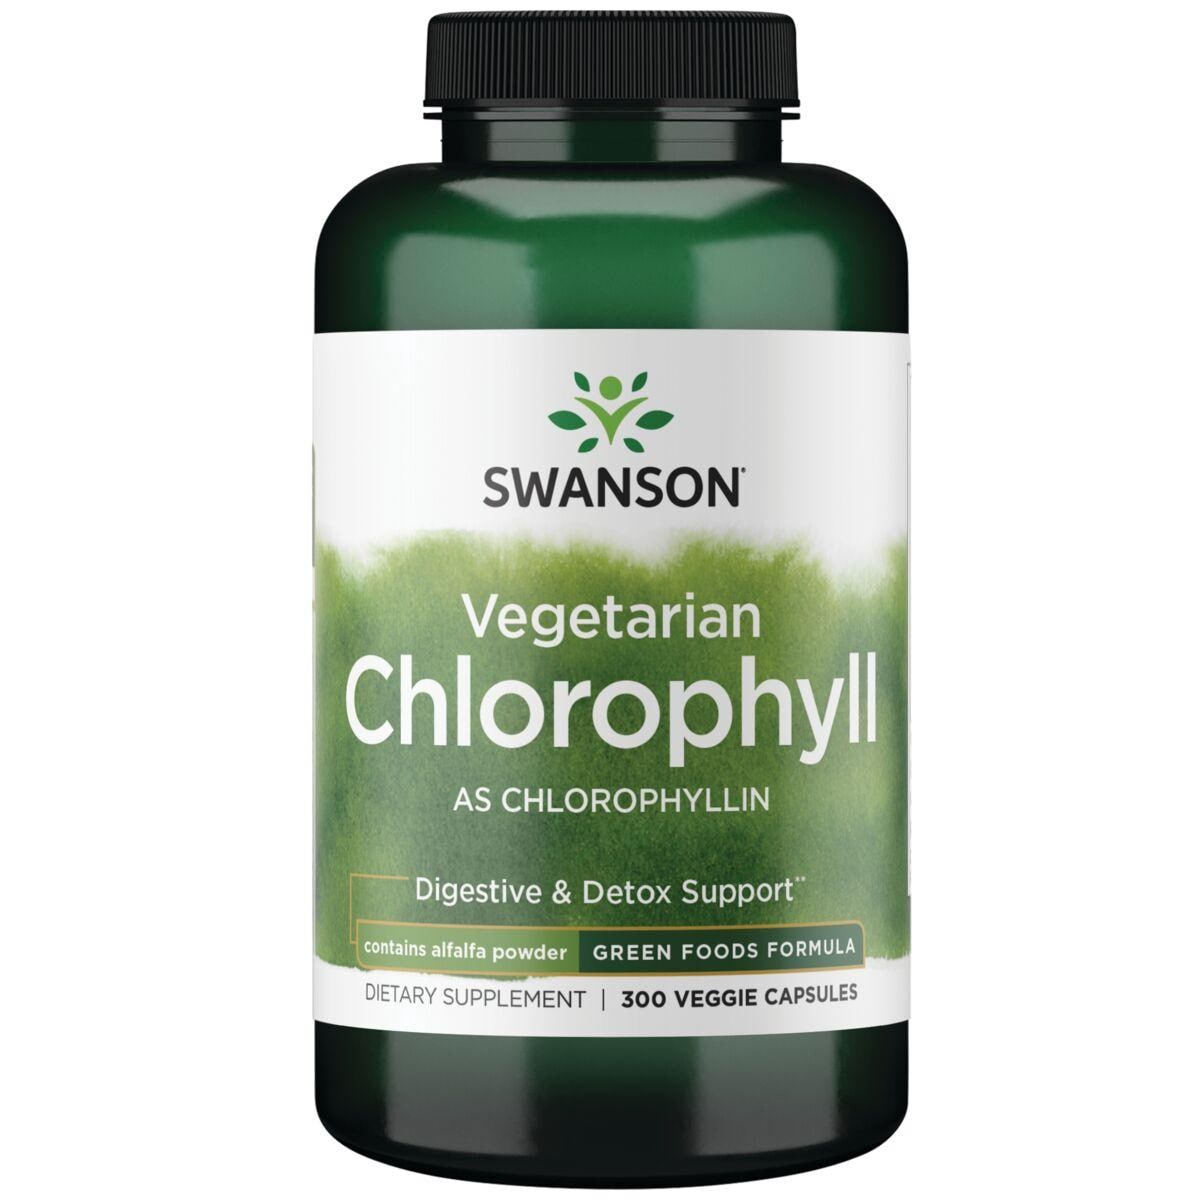 Swanson GreenFoods Formulas Vegetarian Chlorophyll as Chlorophyllin Supplement Vitamin | 60 mg | 300 Veg Caps